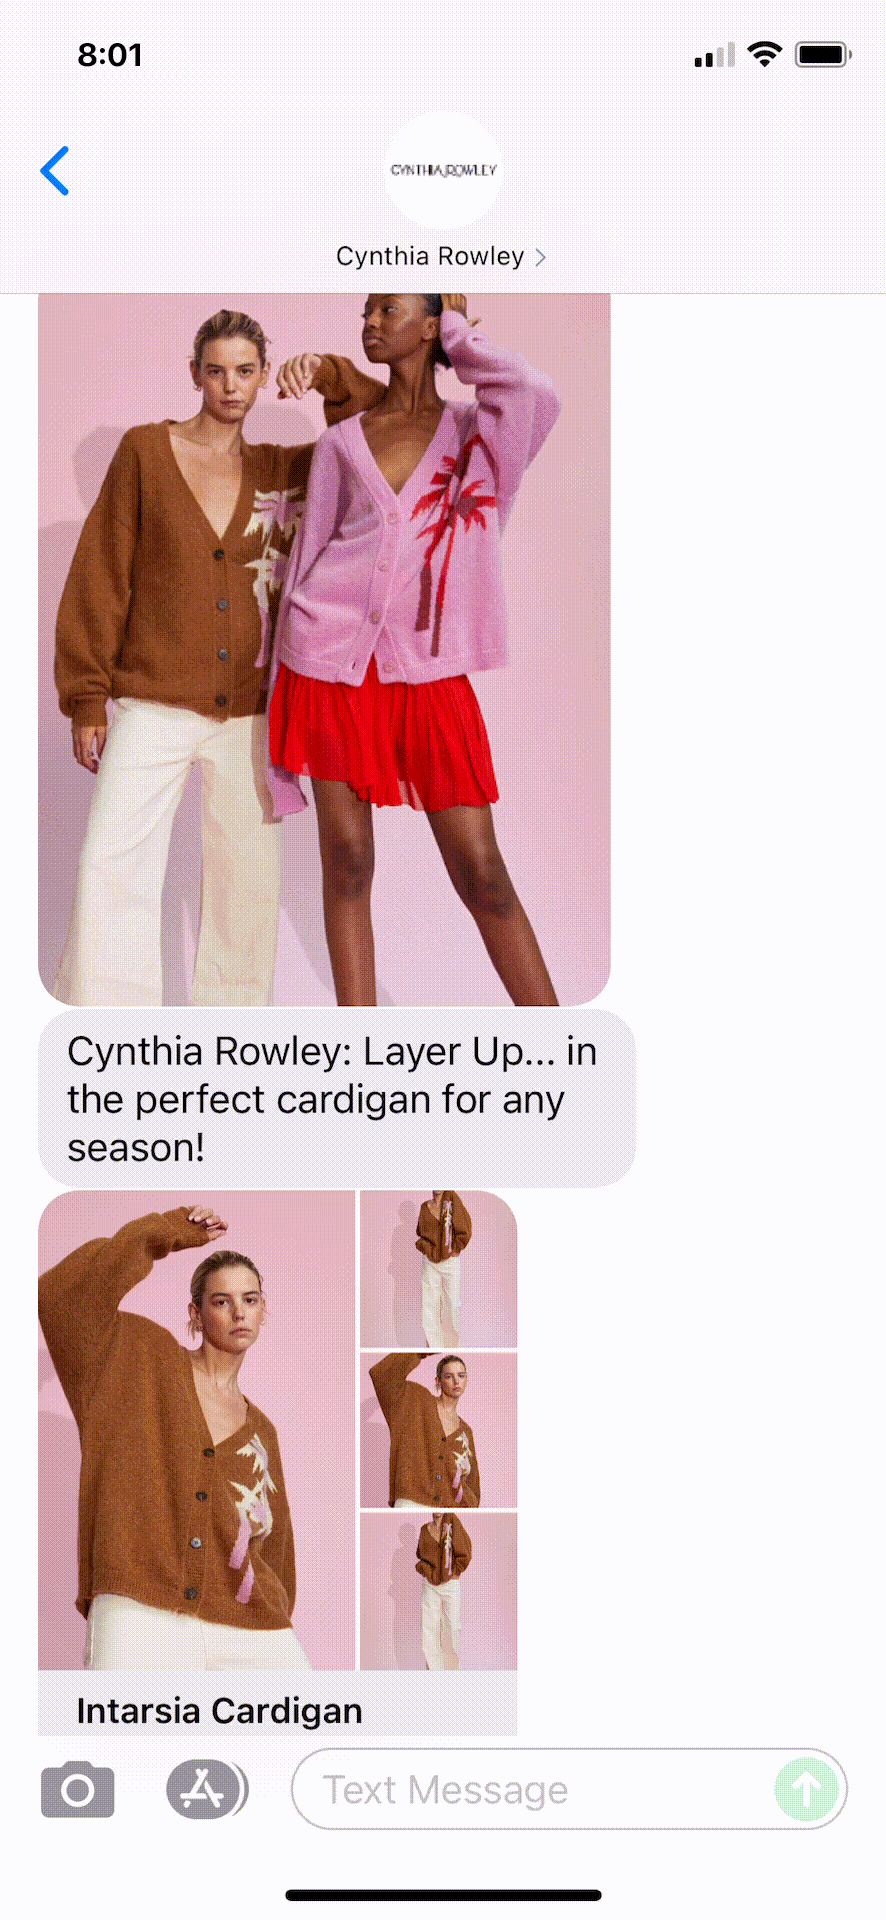 Cynthia-Rowley-Text-Message-Marketing-Example-09.11.2021